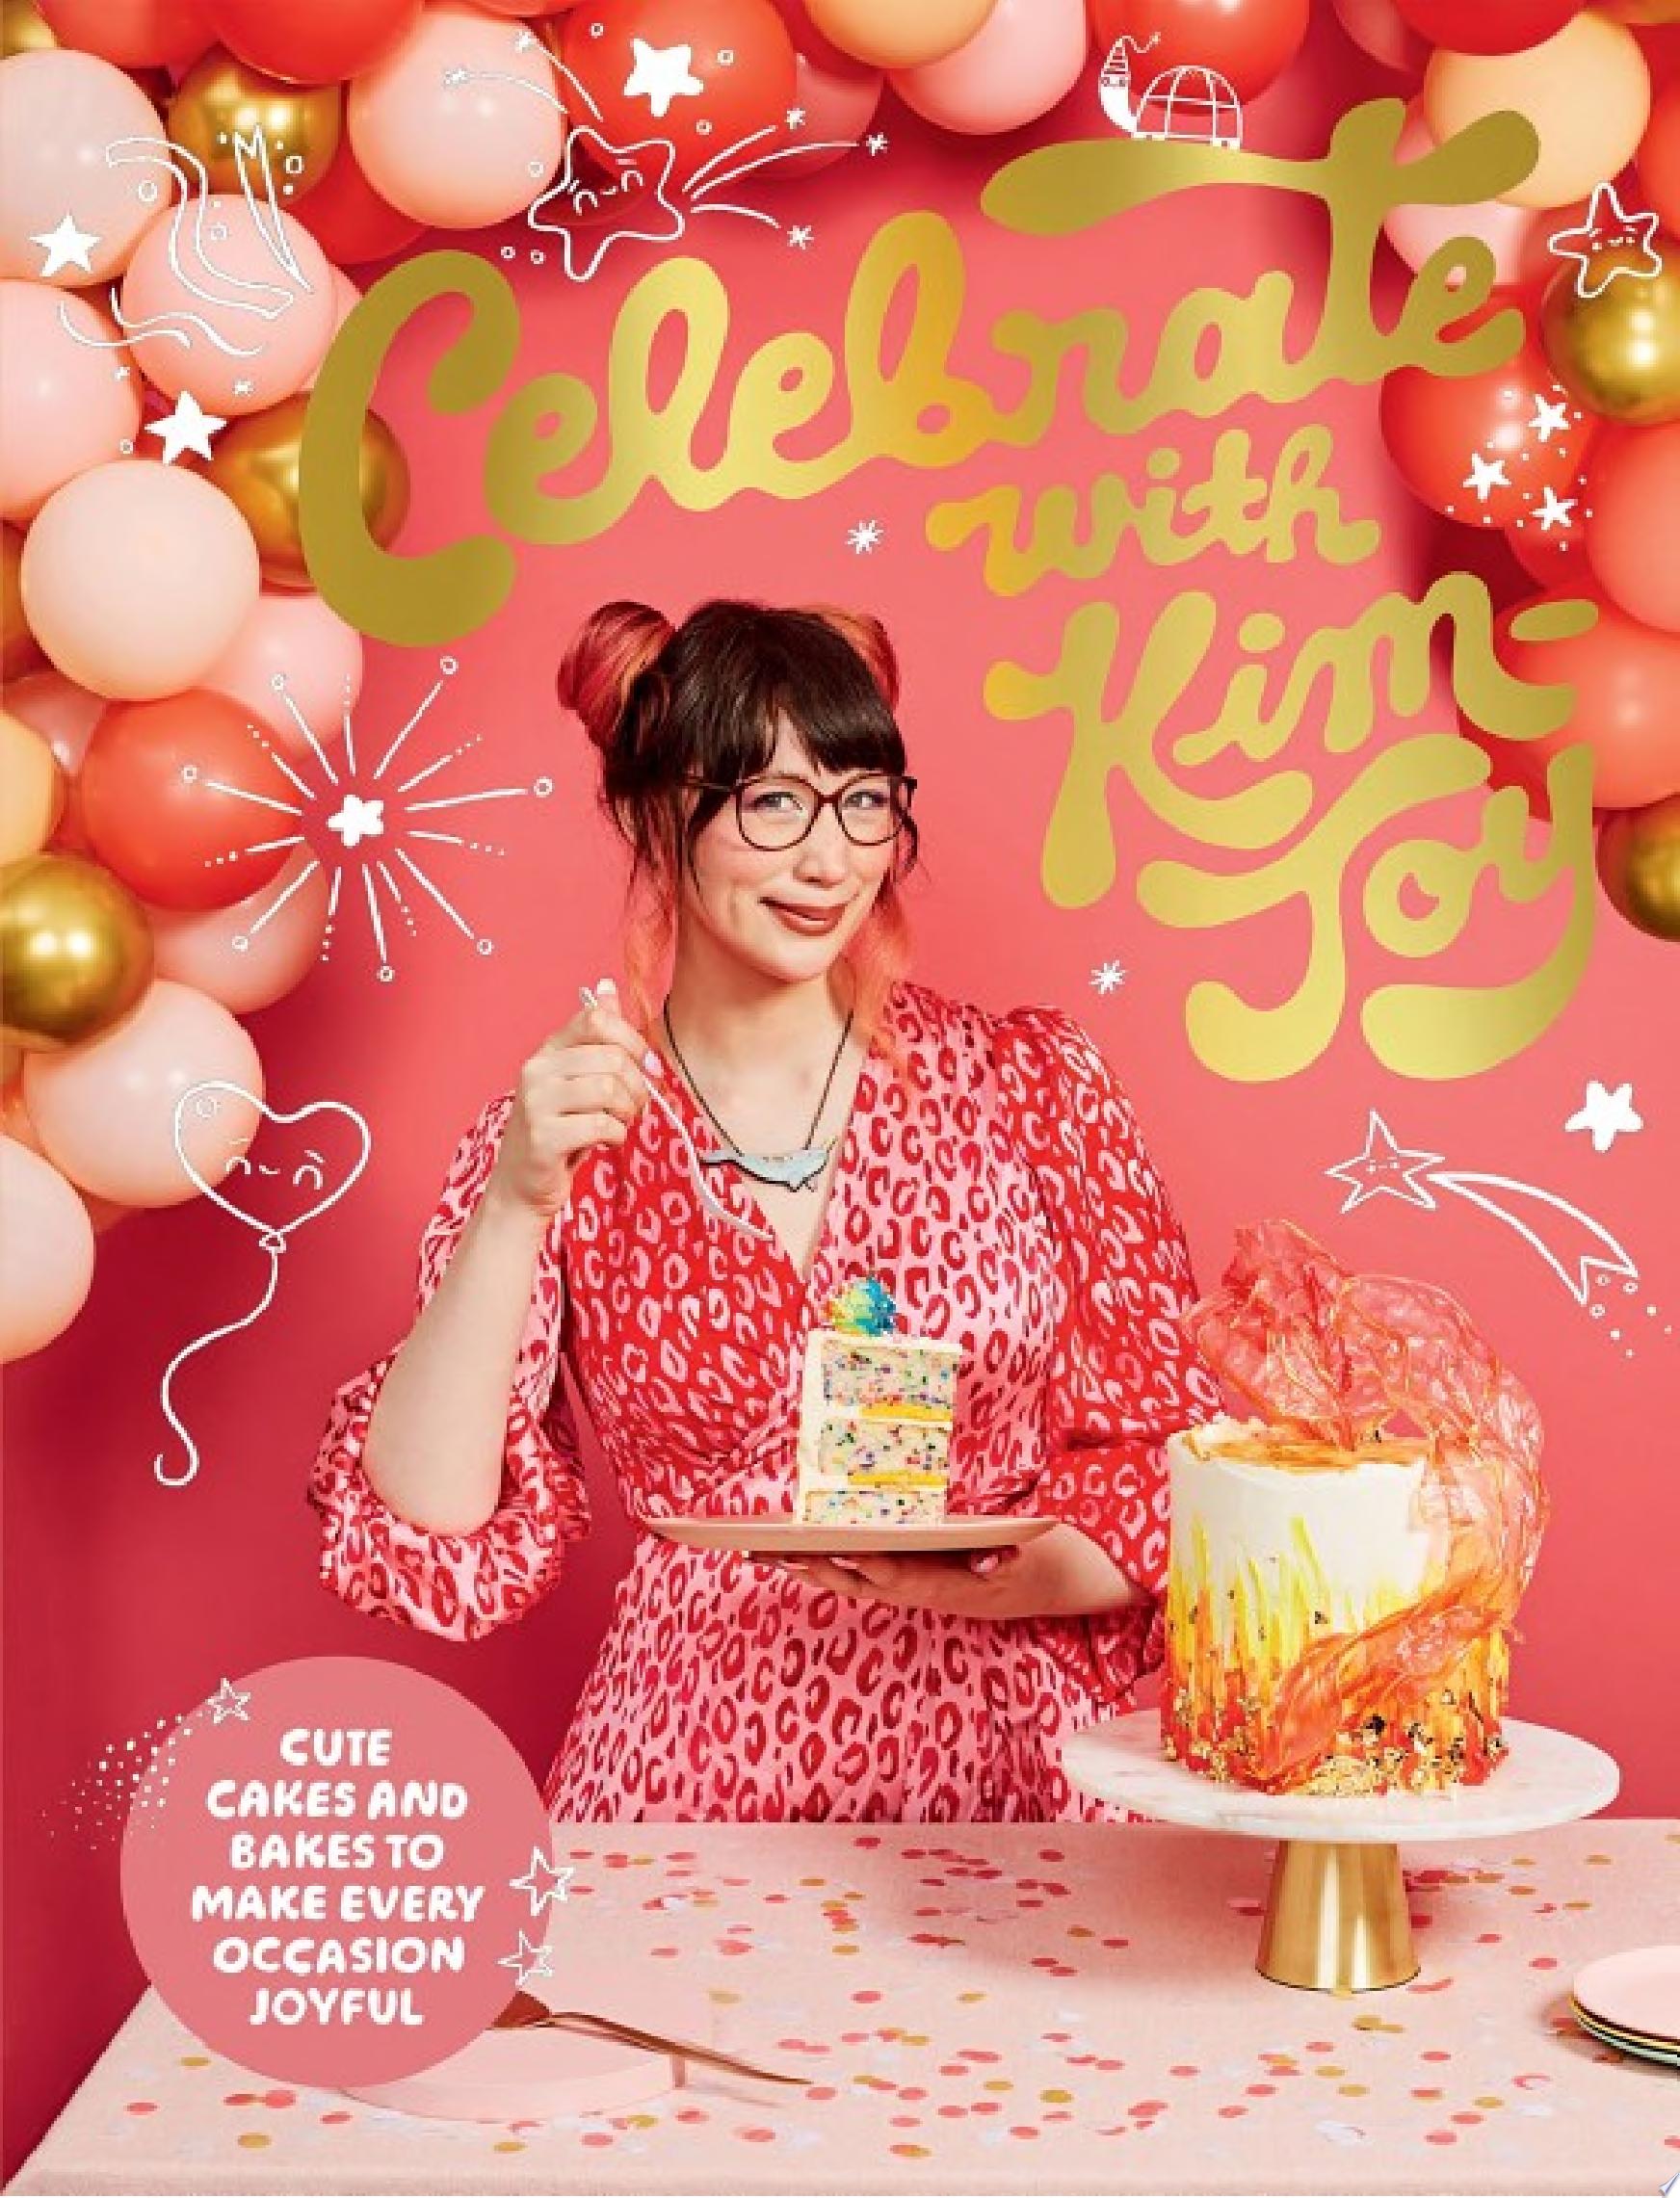 Image for "Celebrate with Kim-Joy"